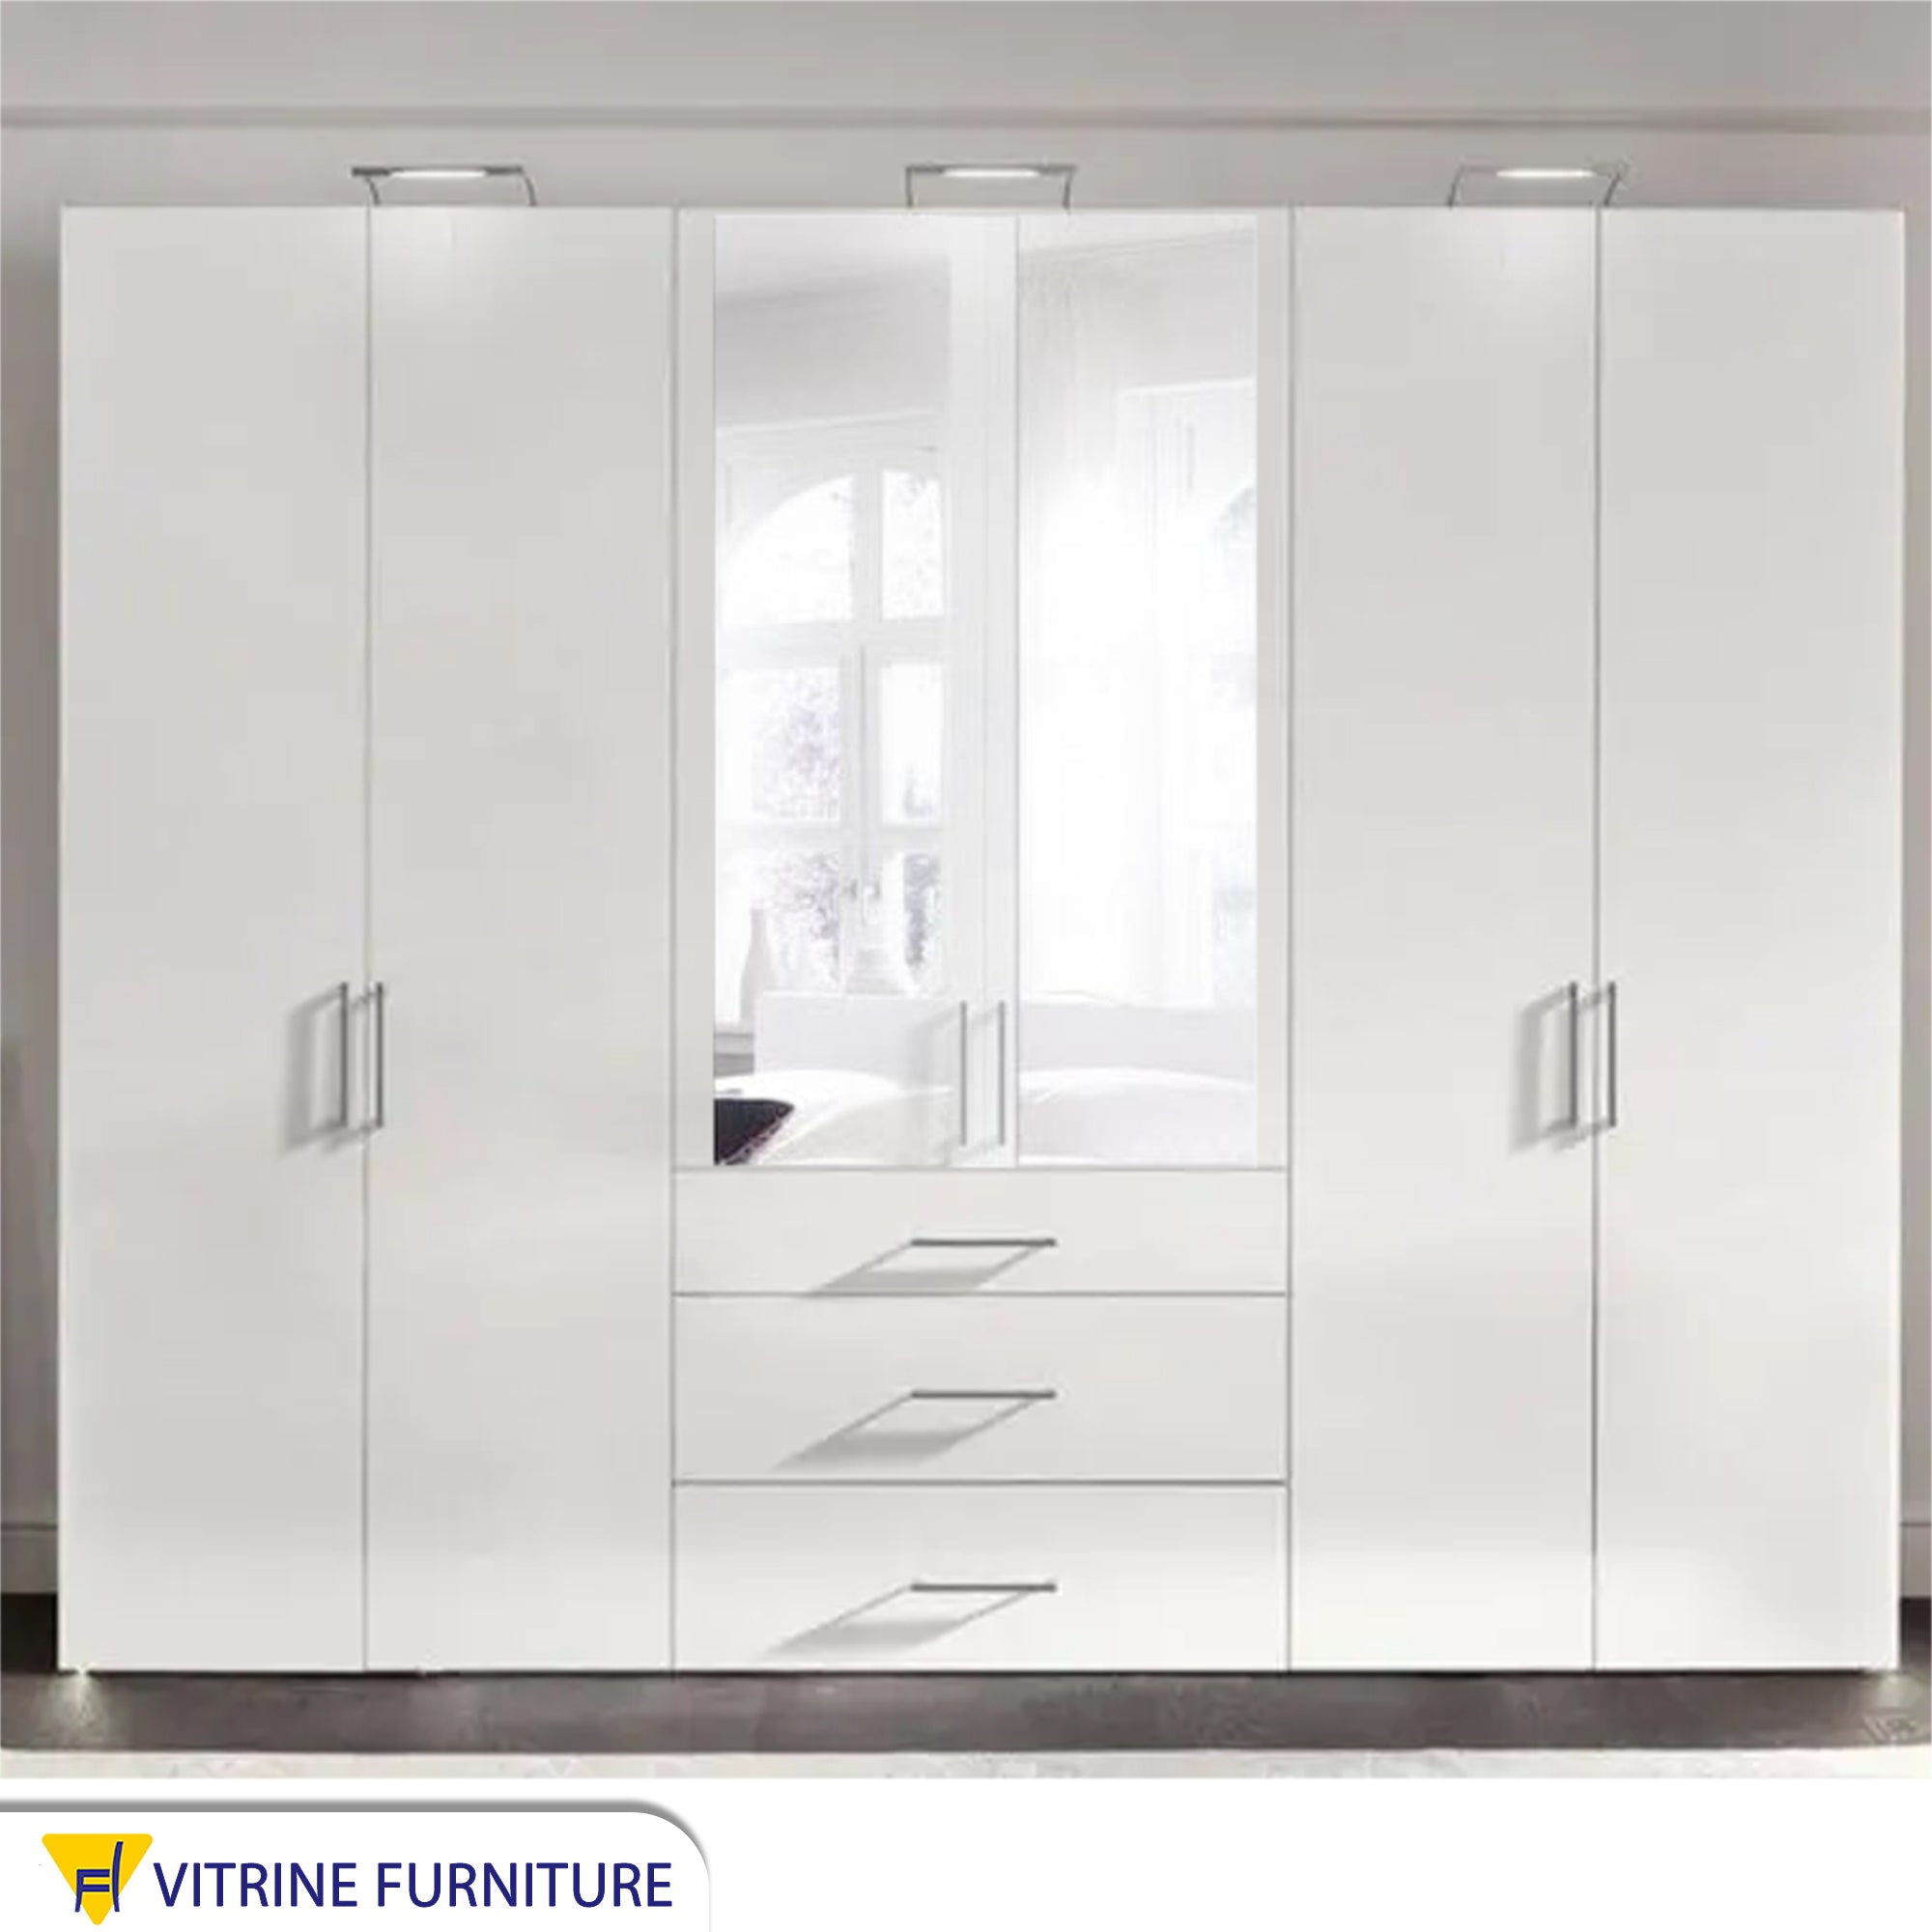 A white wardrobe with distinctive elegance